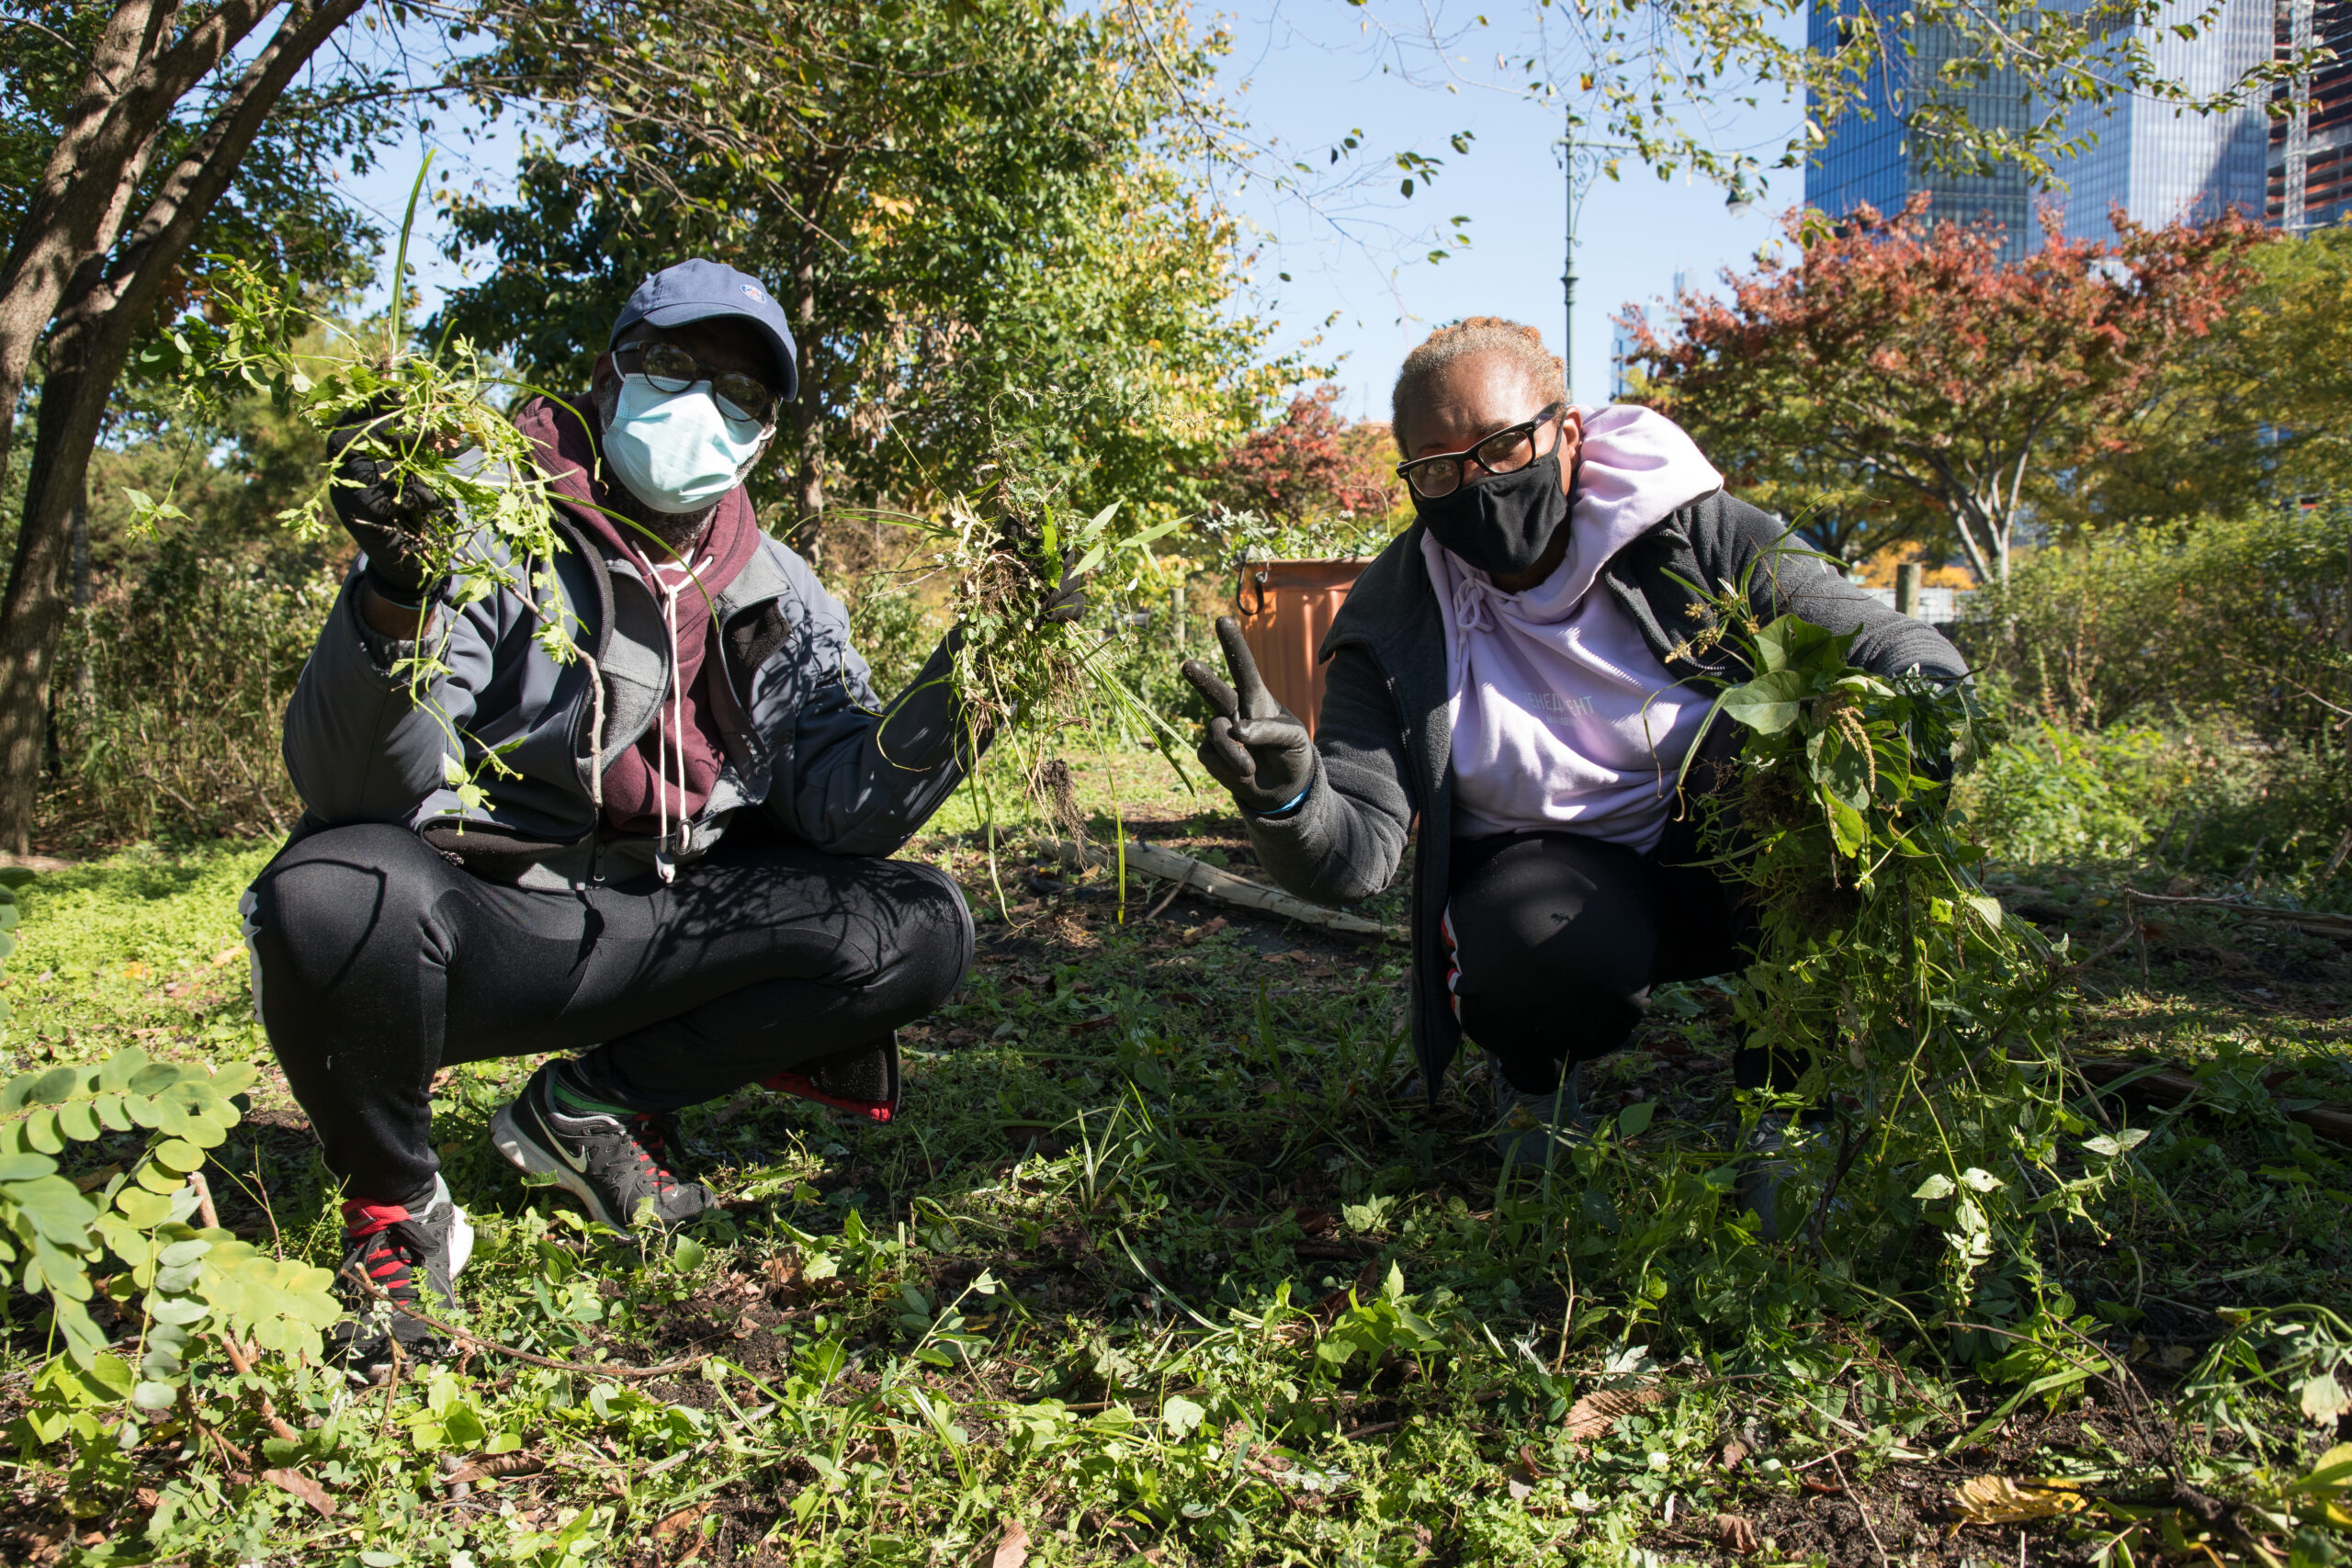 HRPK Volunteers Freddy E. and Danielle E. help trim back the Habitat Garden